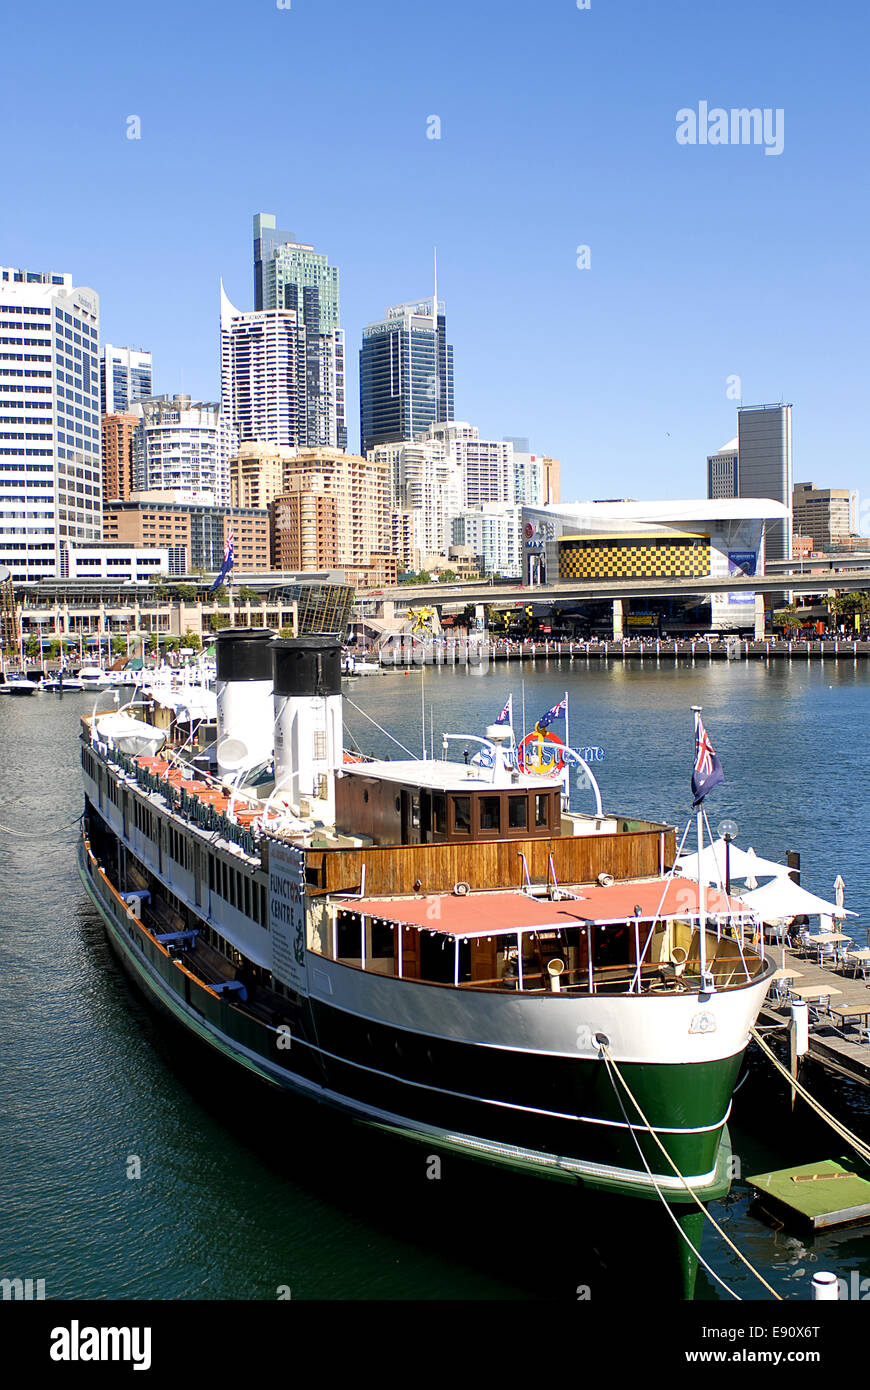 Darling Harbour - Sydney - Australien Stock Photo